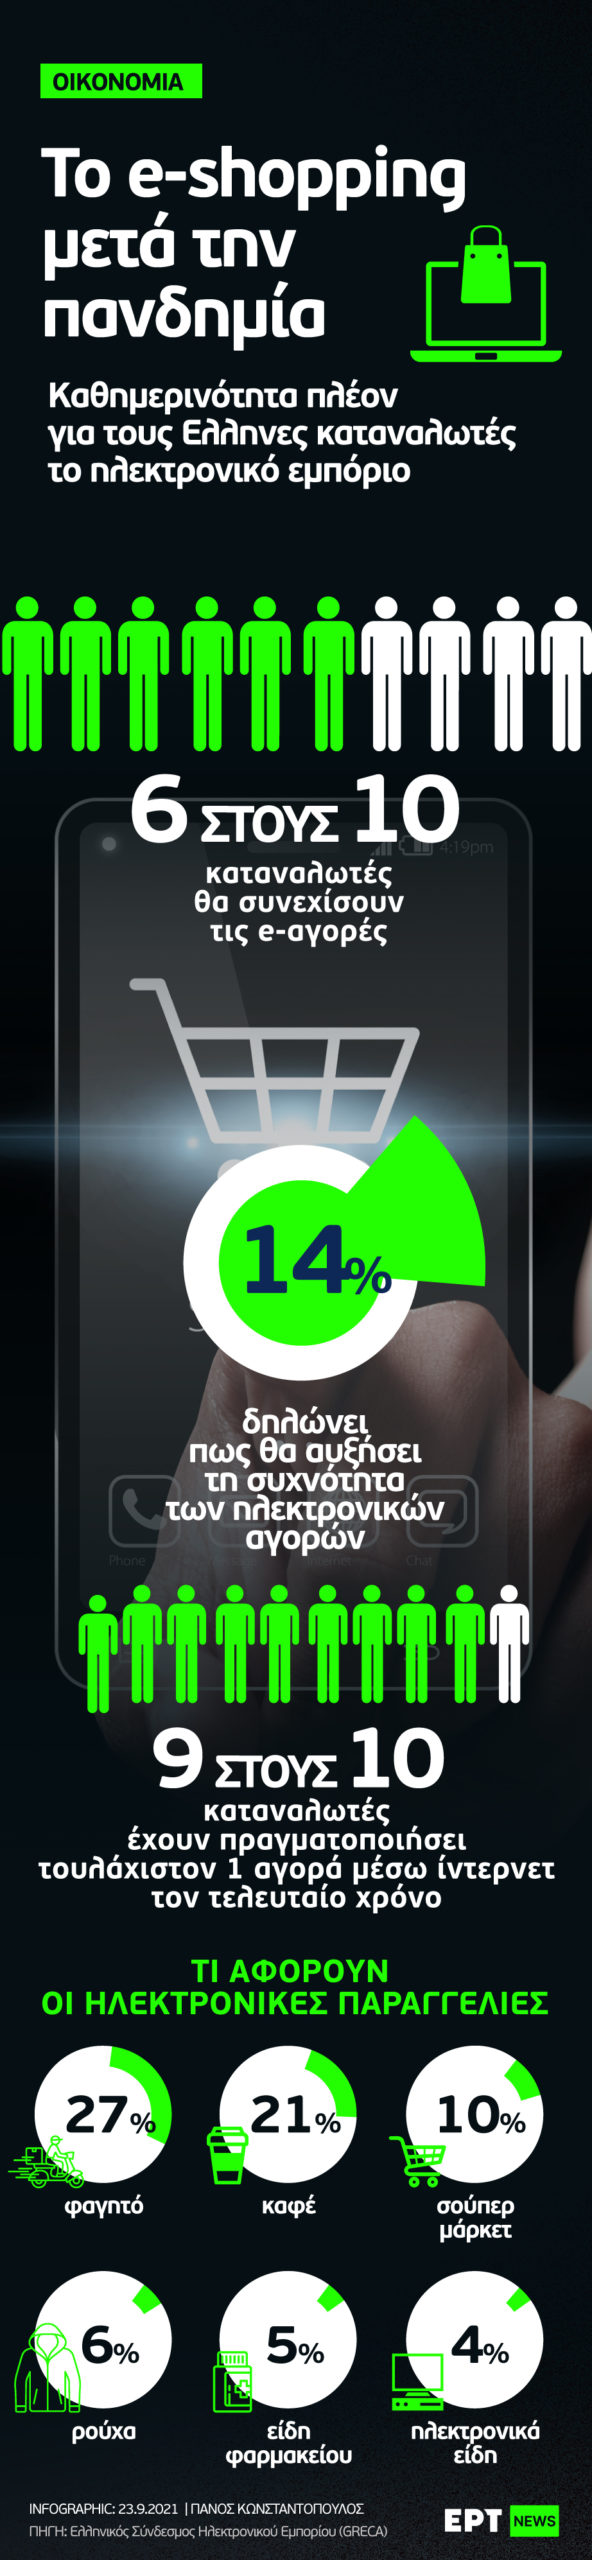 Infographic: Το e-shopping μετά την πανδημία